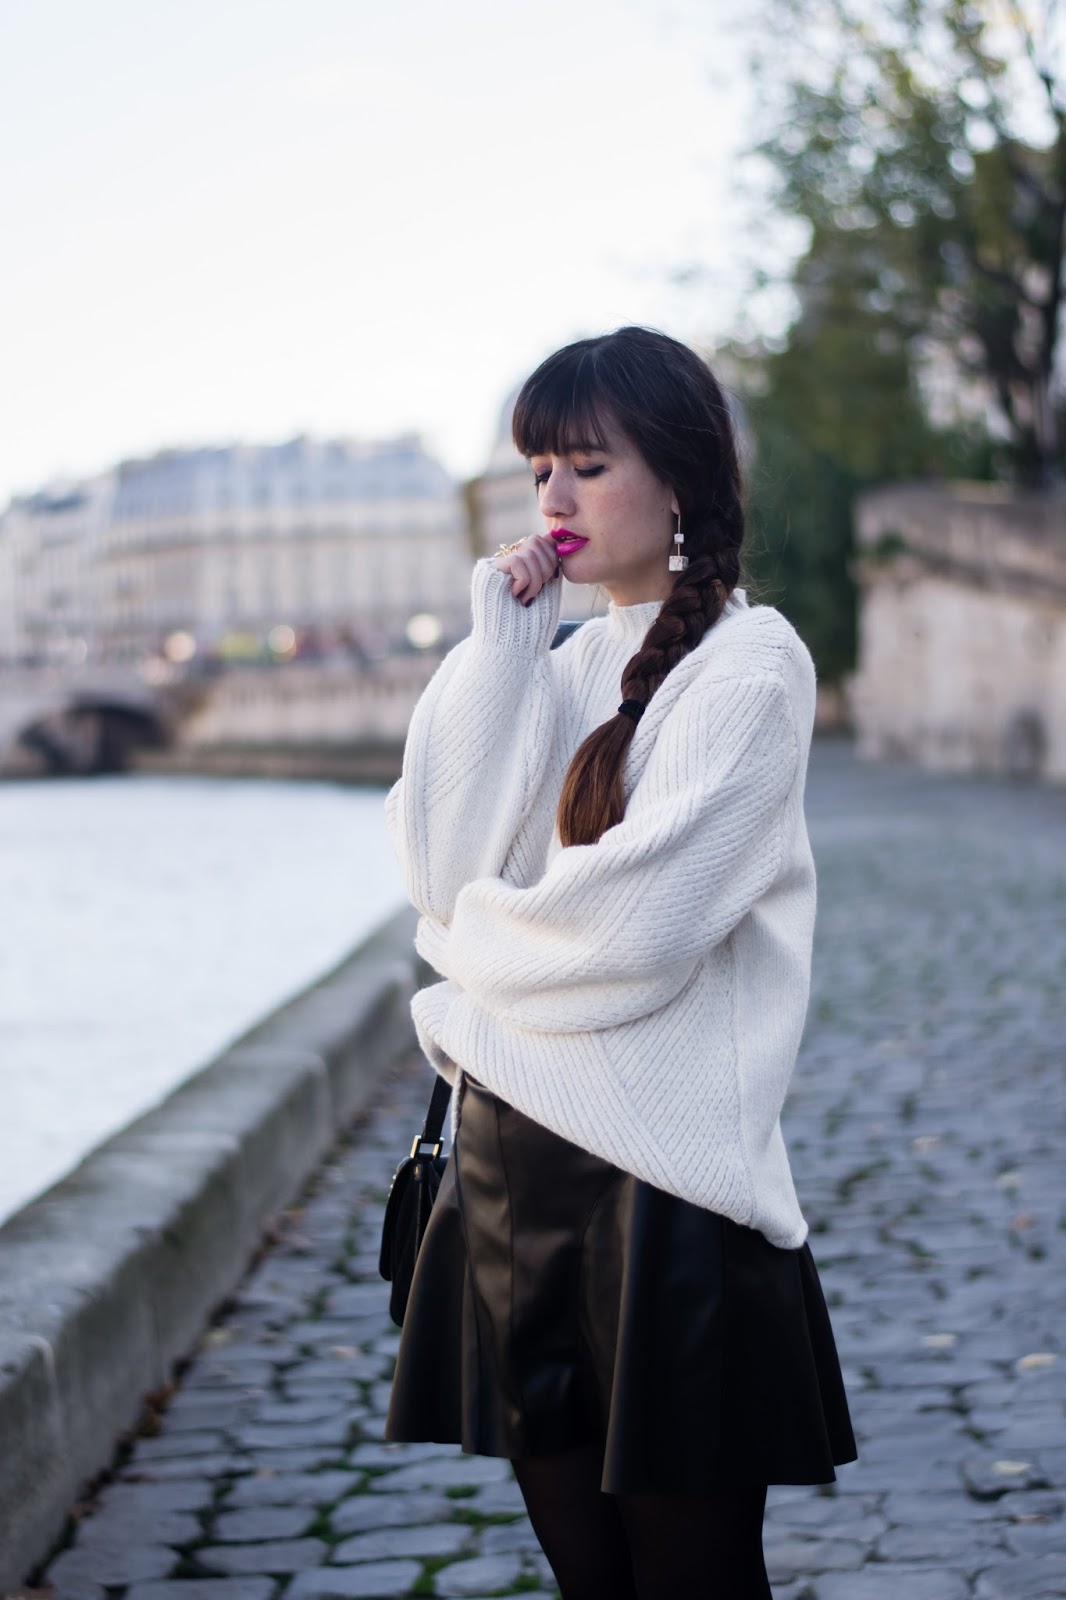 Paris, meetmeinparee, style, chic Parisian style, streeystyle, paris fashion blogger, look, mode, British blogger